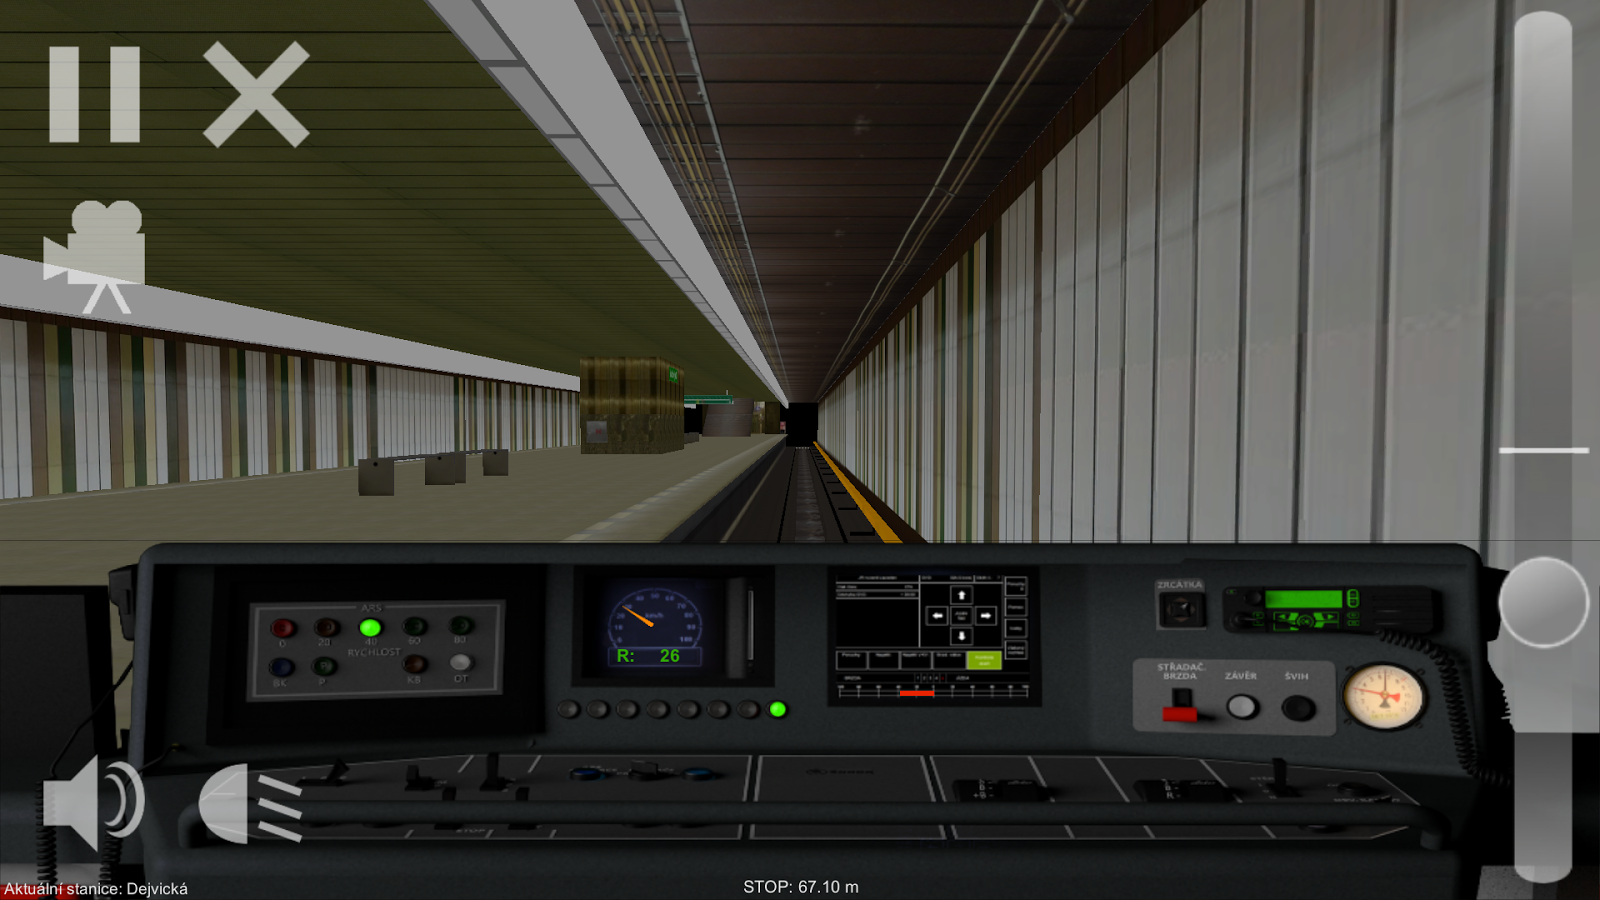 Download Subway Simulator Prague Metro for PC